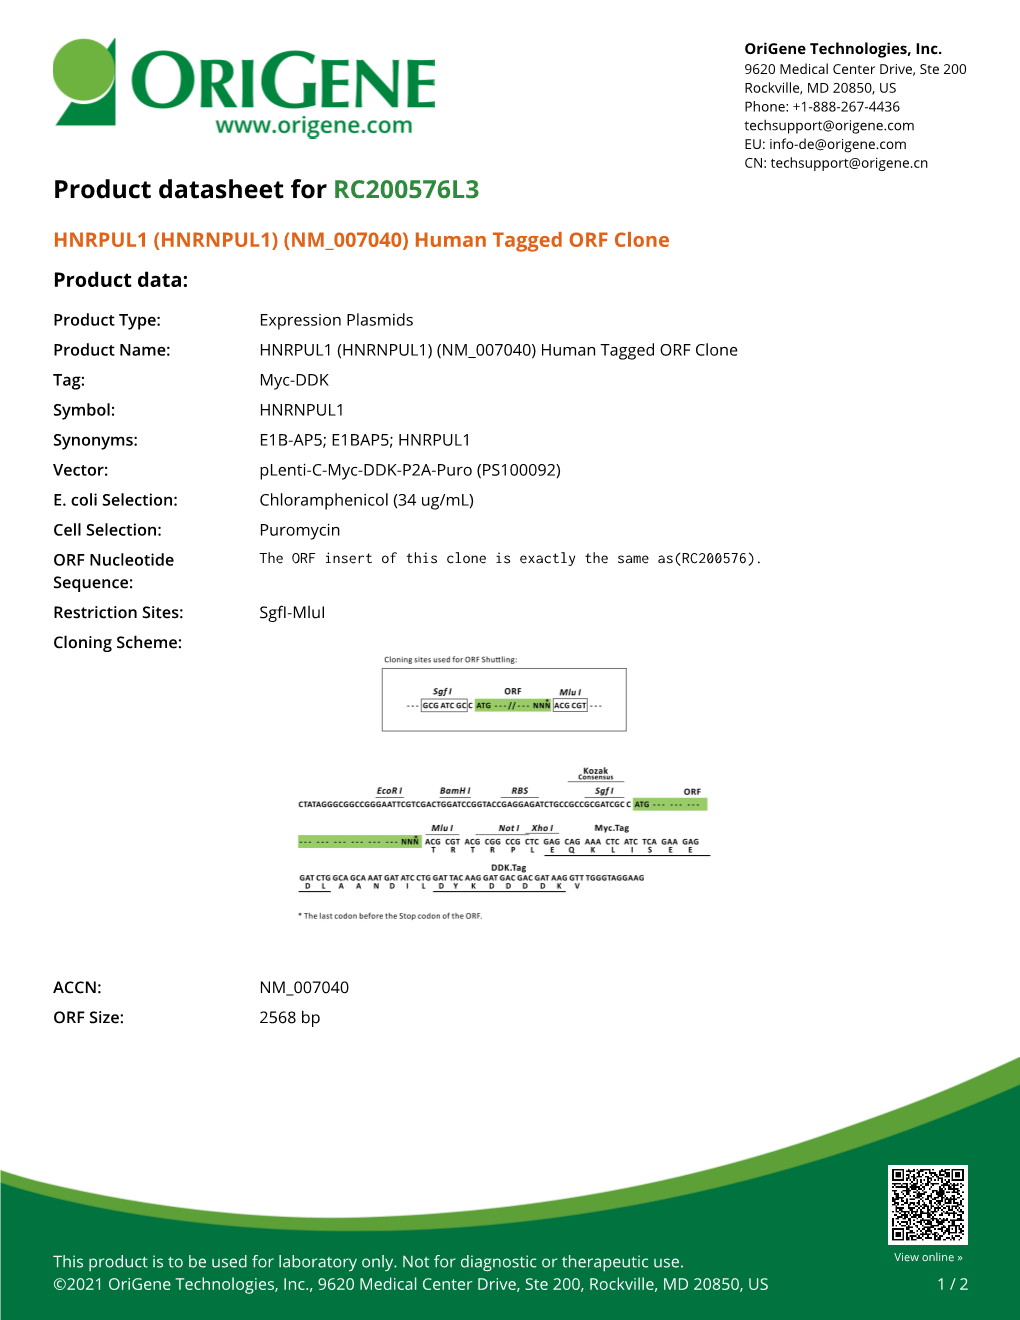 HNRPUL1 (HNRNPUL1) (NM 007040) Human Tagged ORF Clone Product Data